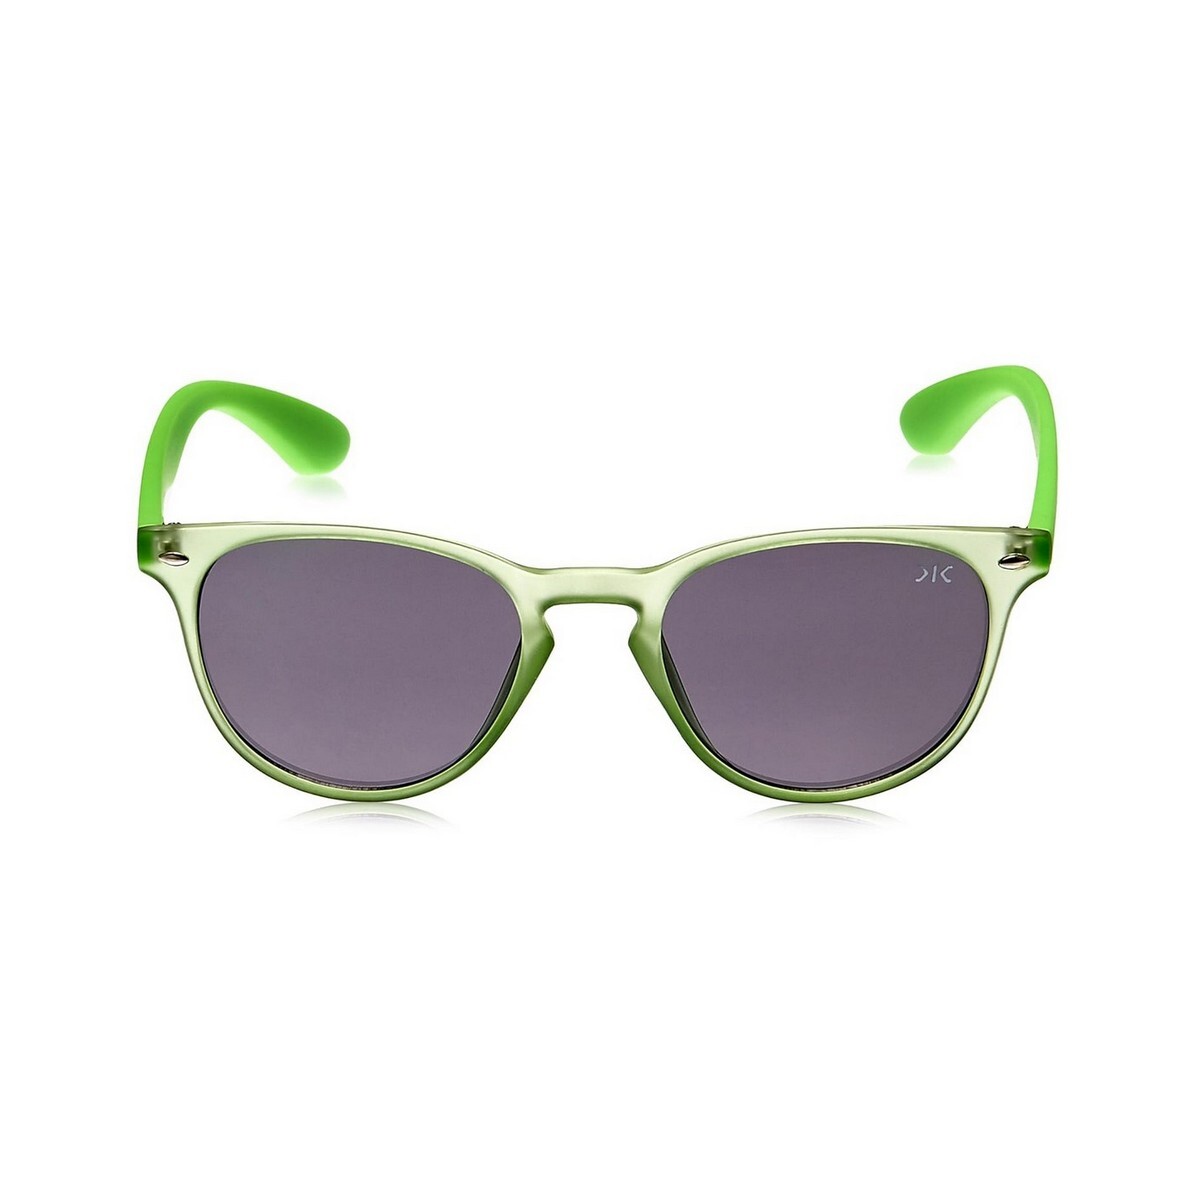 Killer Unisex Green Frame With Grey Lens Sunglass